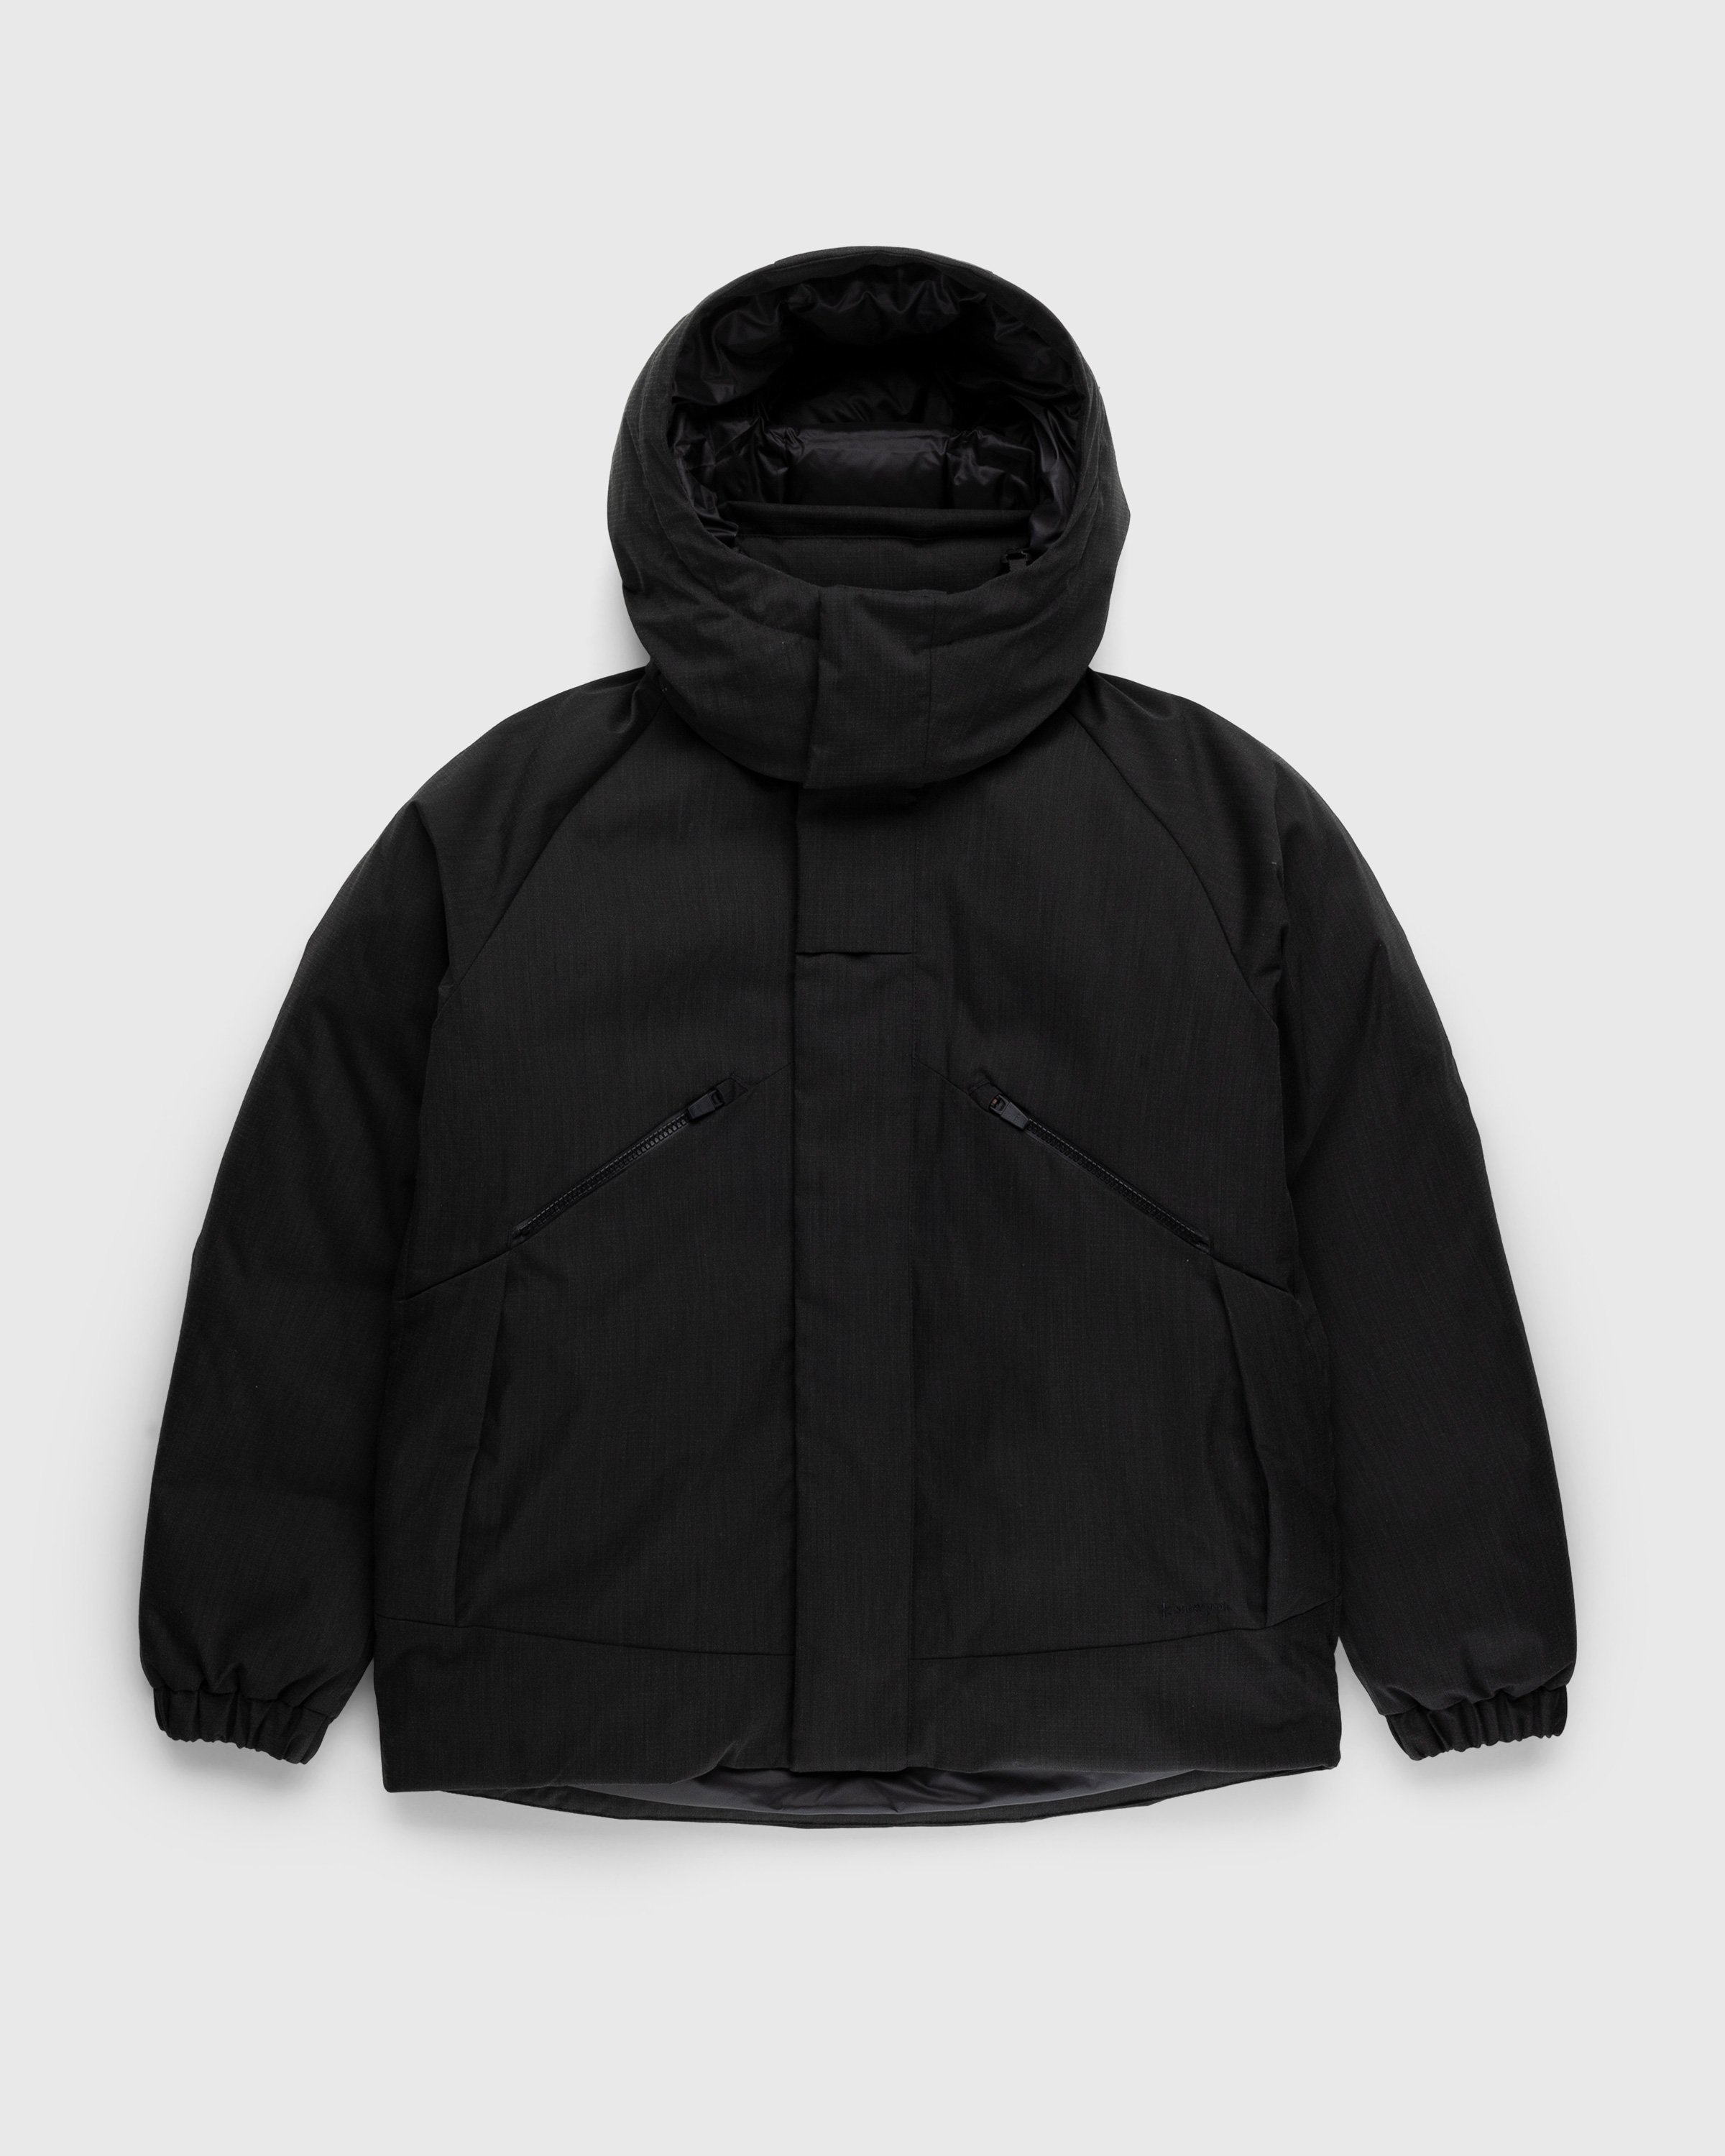 Snow Peak - Fire-Resistant 2 Layer Down Jacket Black - Clothing - Black - Image 1